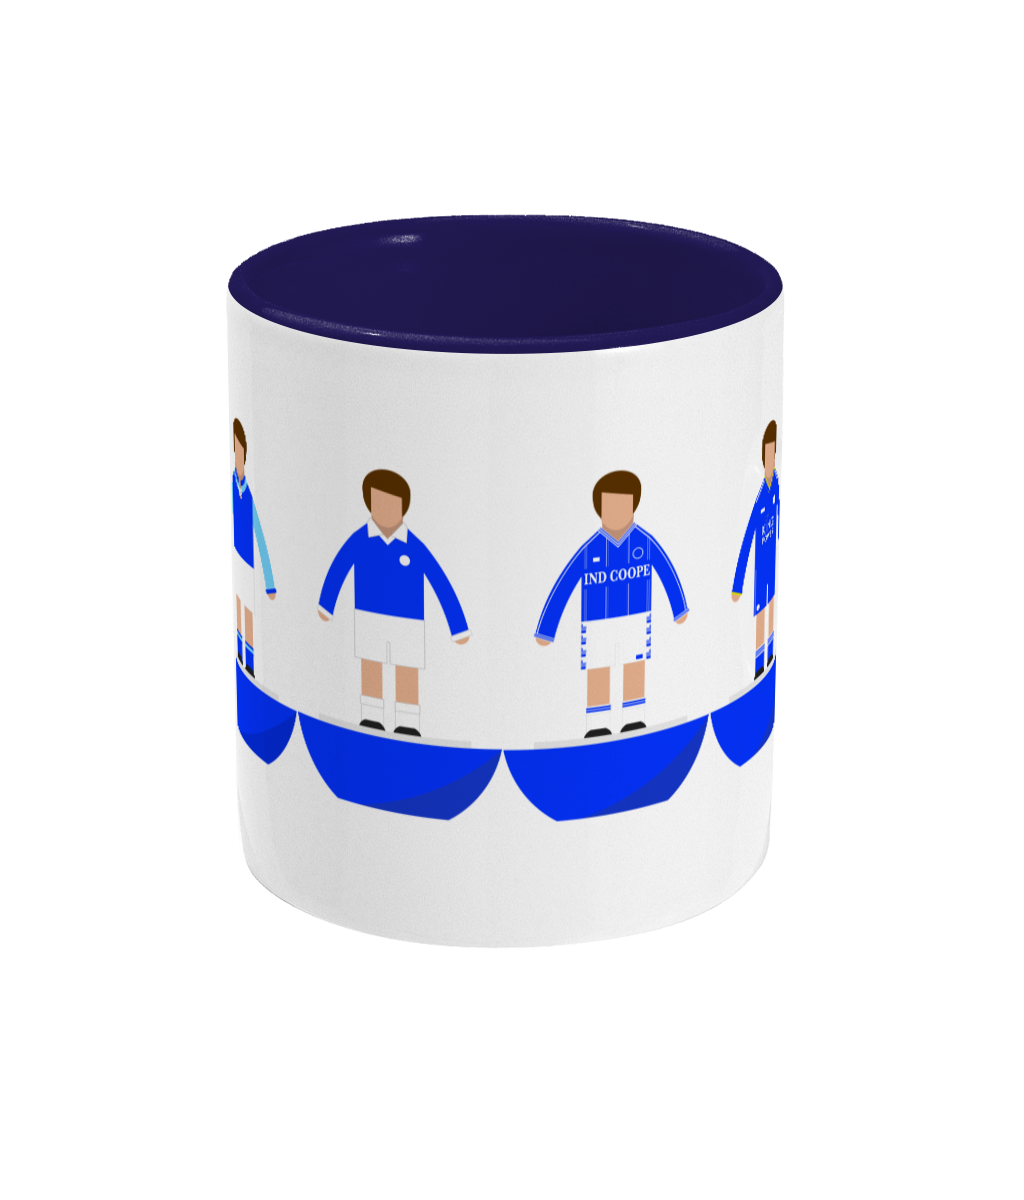 Football Kits 'Leicester combined' Mug